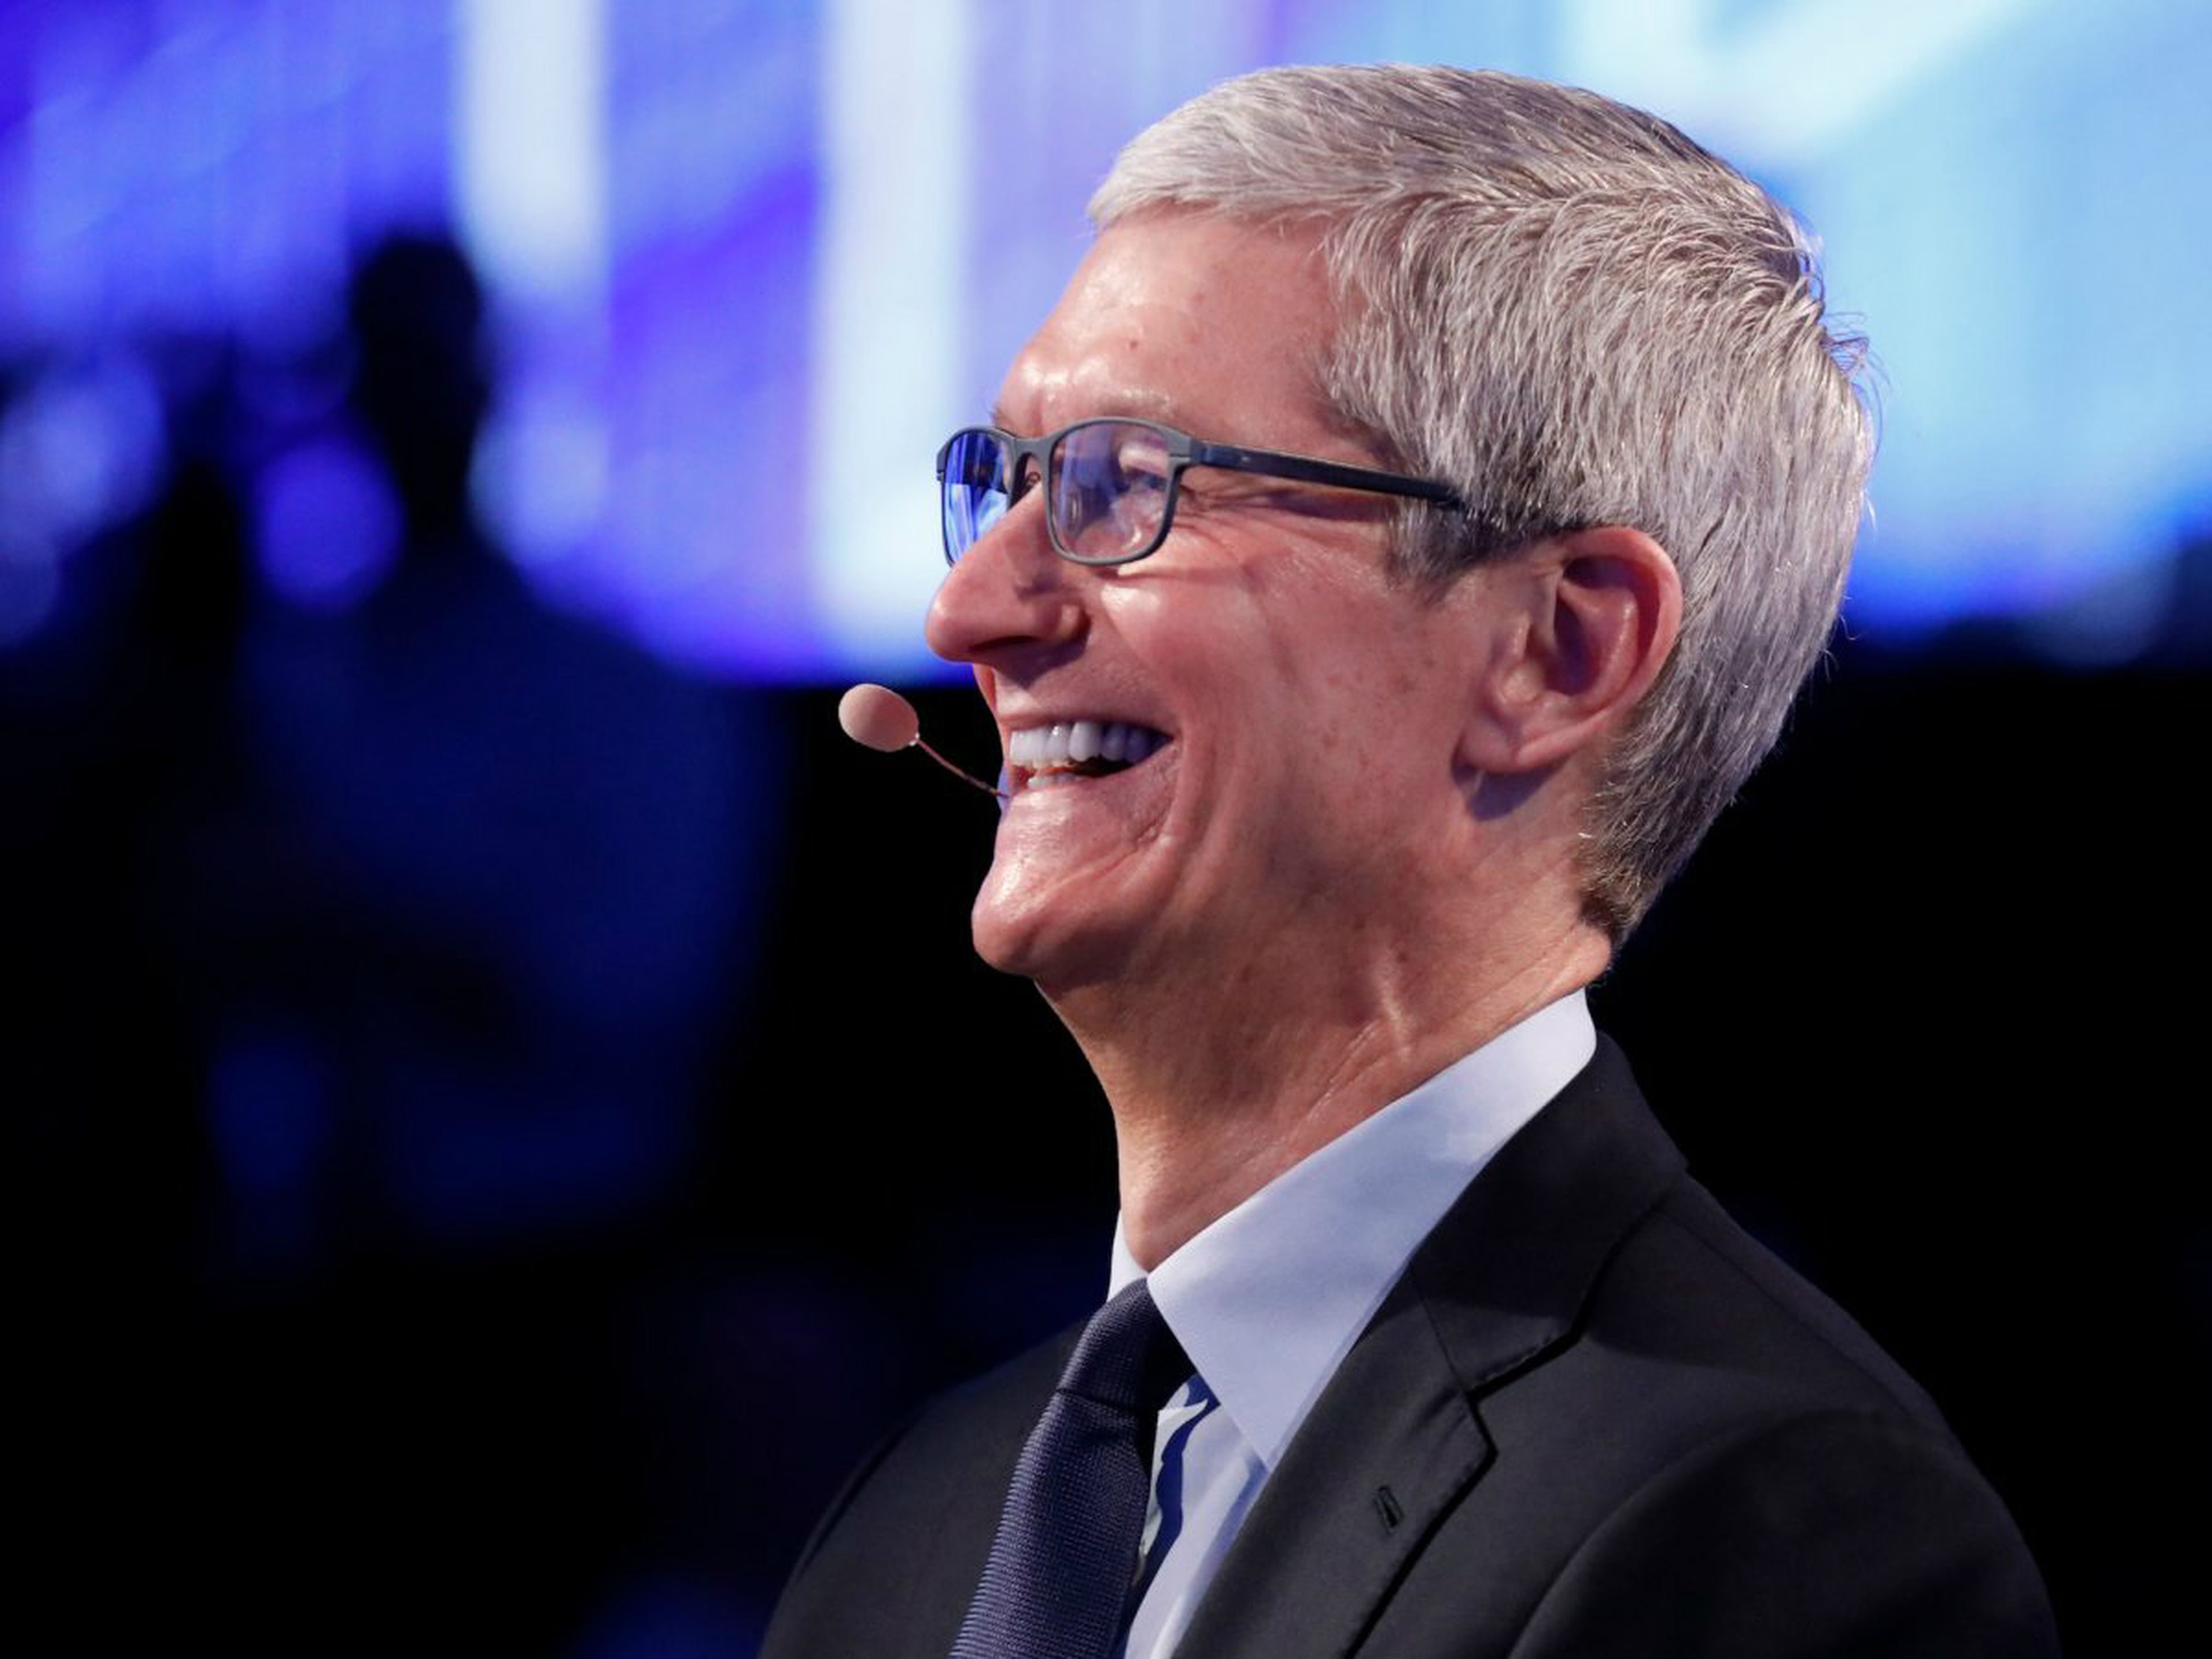 El director ejecutivo de Apple, Tim Cook, ganó 12,8 millones de dólares en 2017.